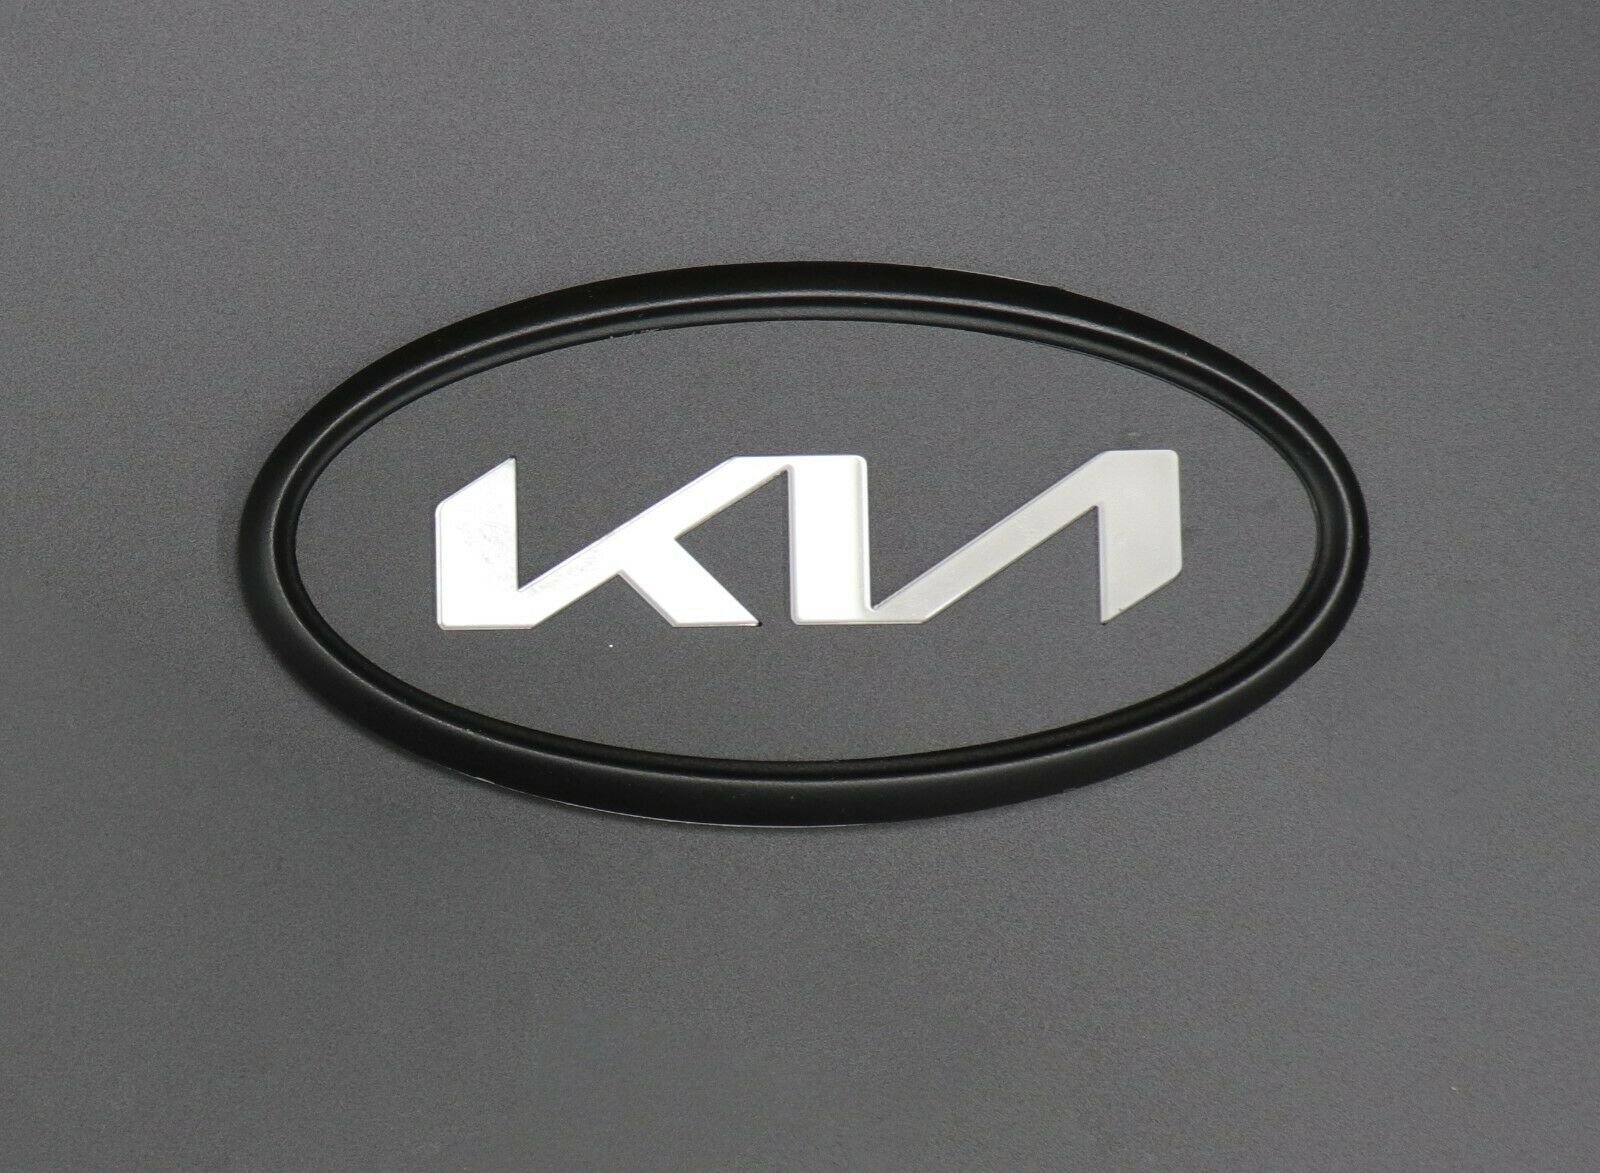 Kia Emblem New 2021